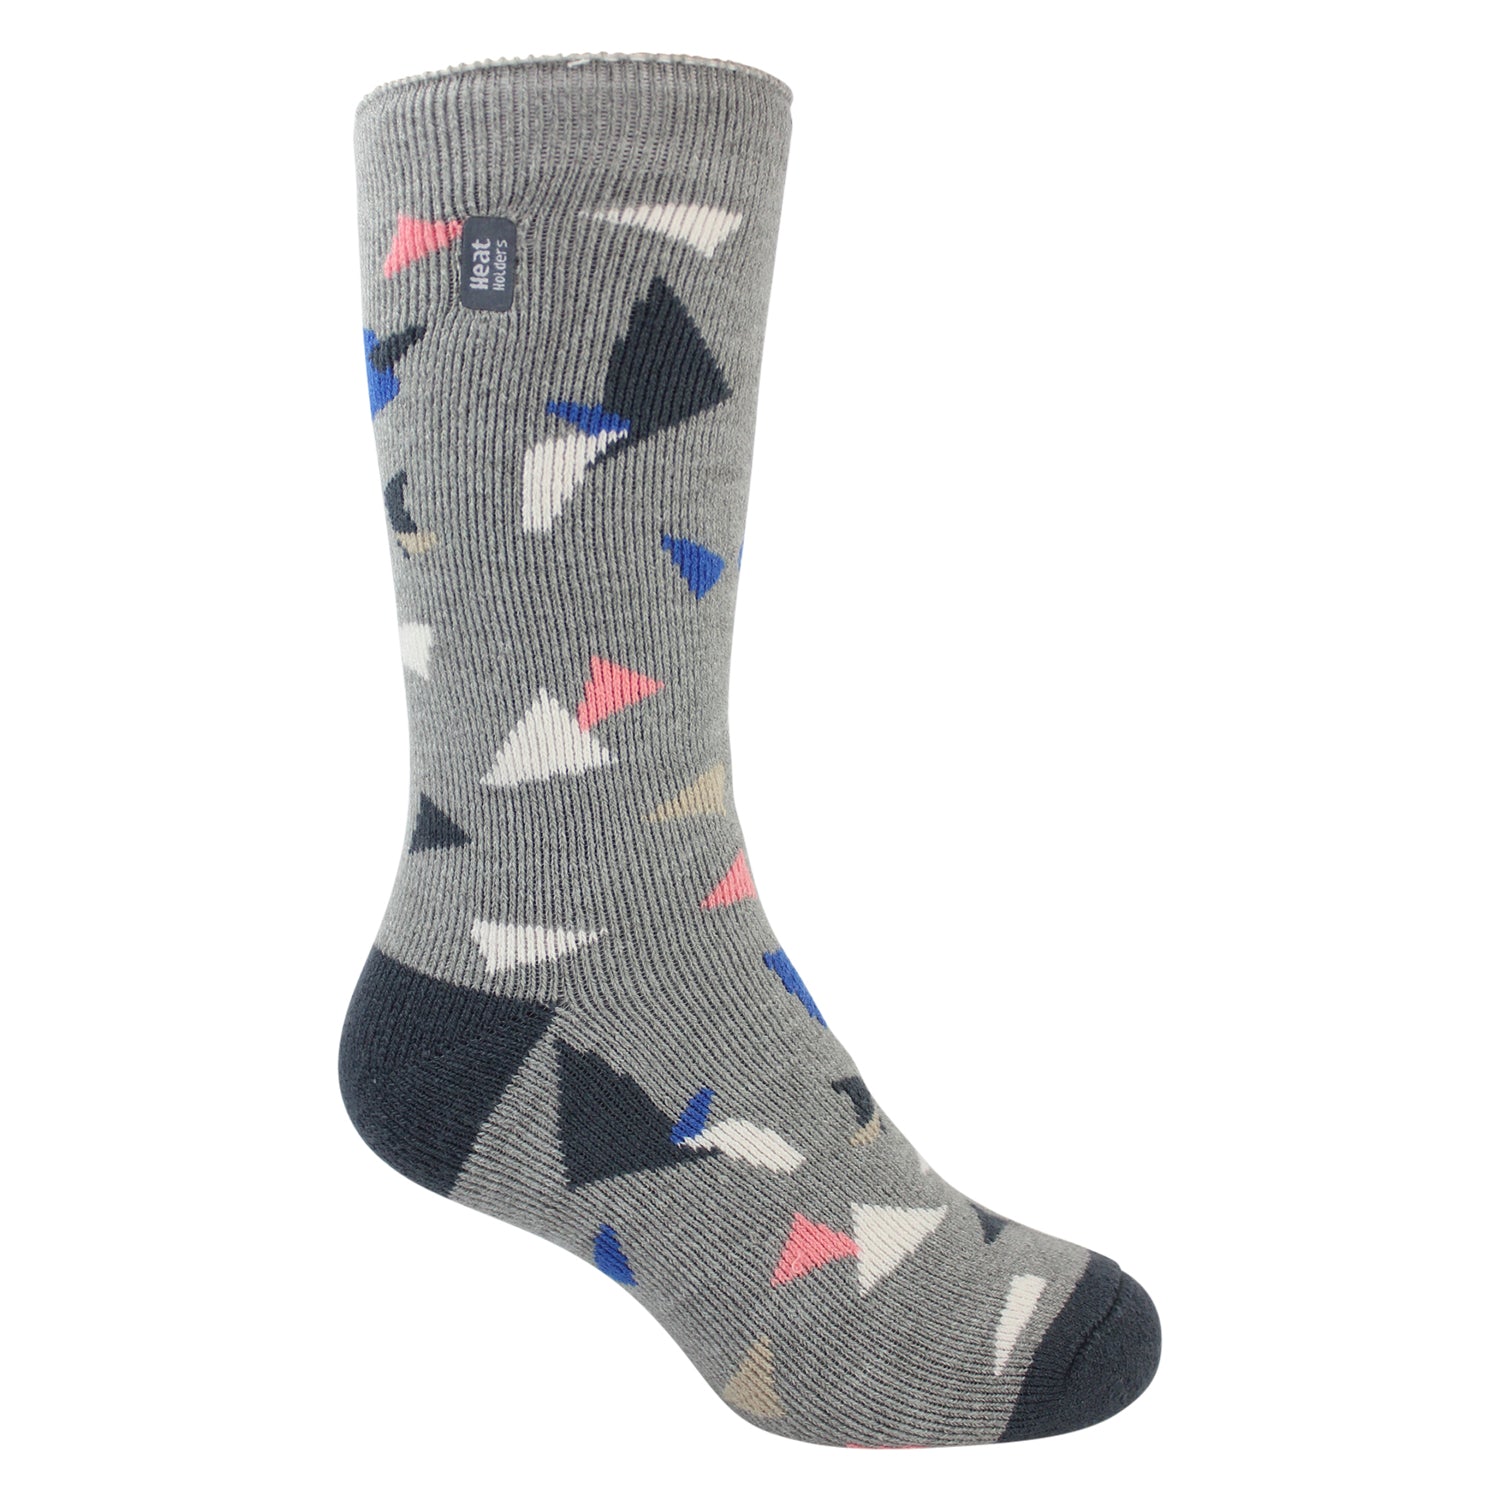 HEAT HOLDERS UK Lite Thermal Socks - Mens Size 6-11